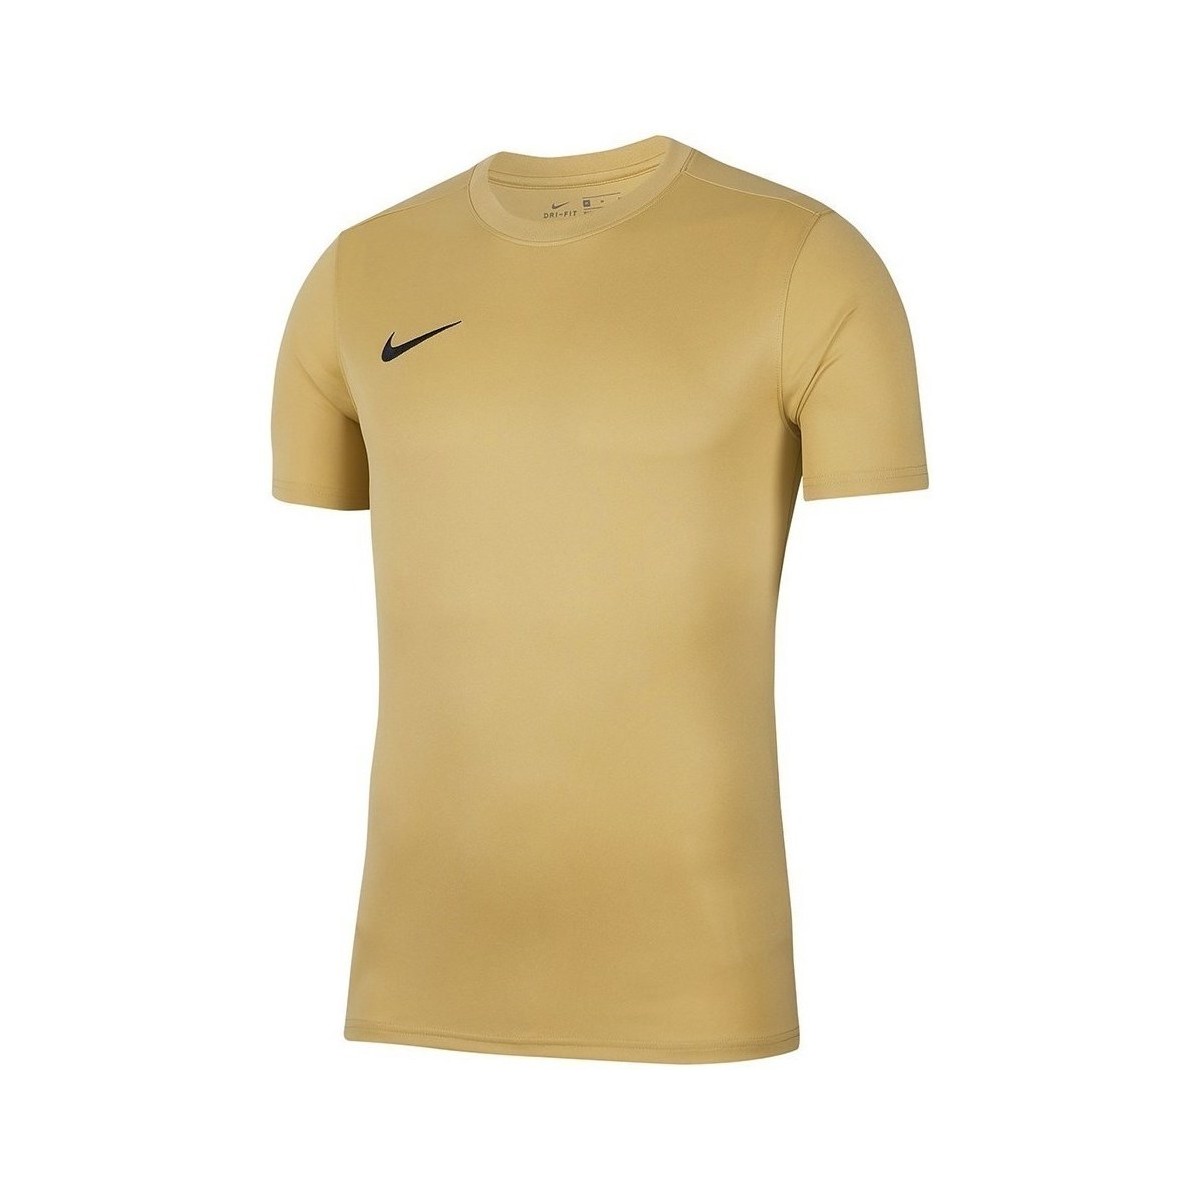 Vêtements Garçon T-shirts manches courtes Nike Dry Park Vii Jsy Jaune